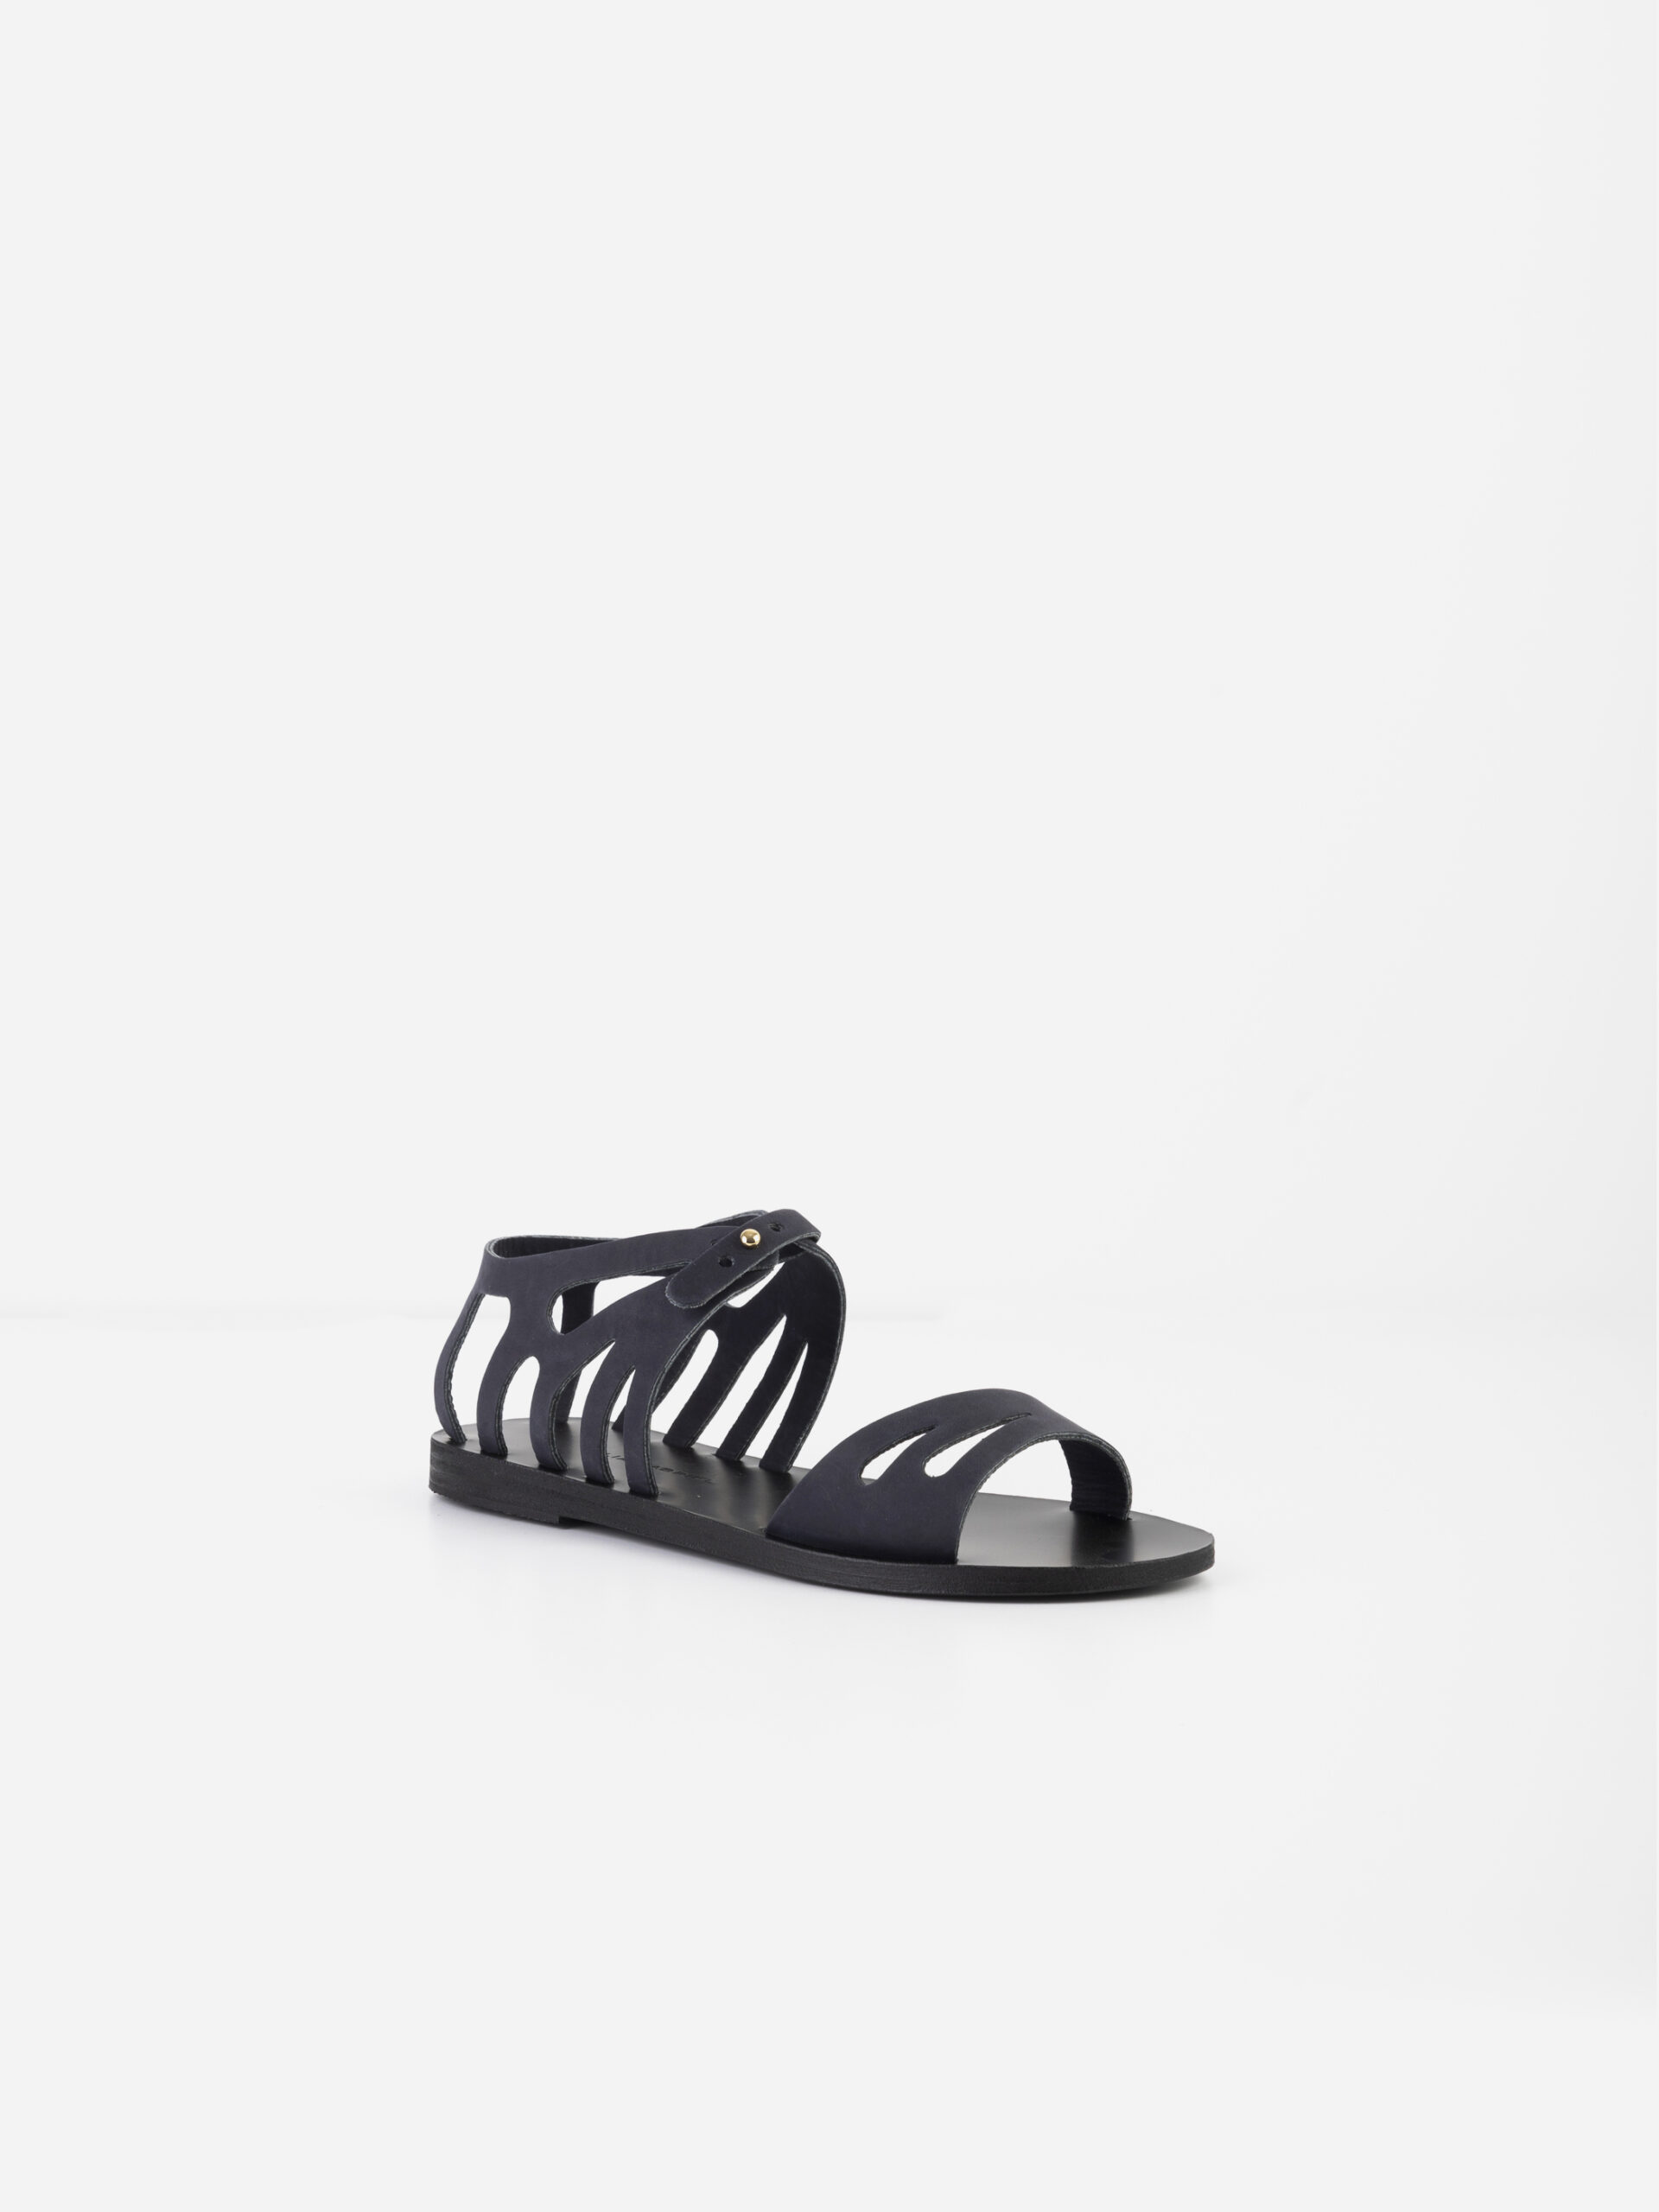 waikiki-black-sandals-leather-greek-designers-valia-gabriel-matchboxathens